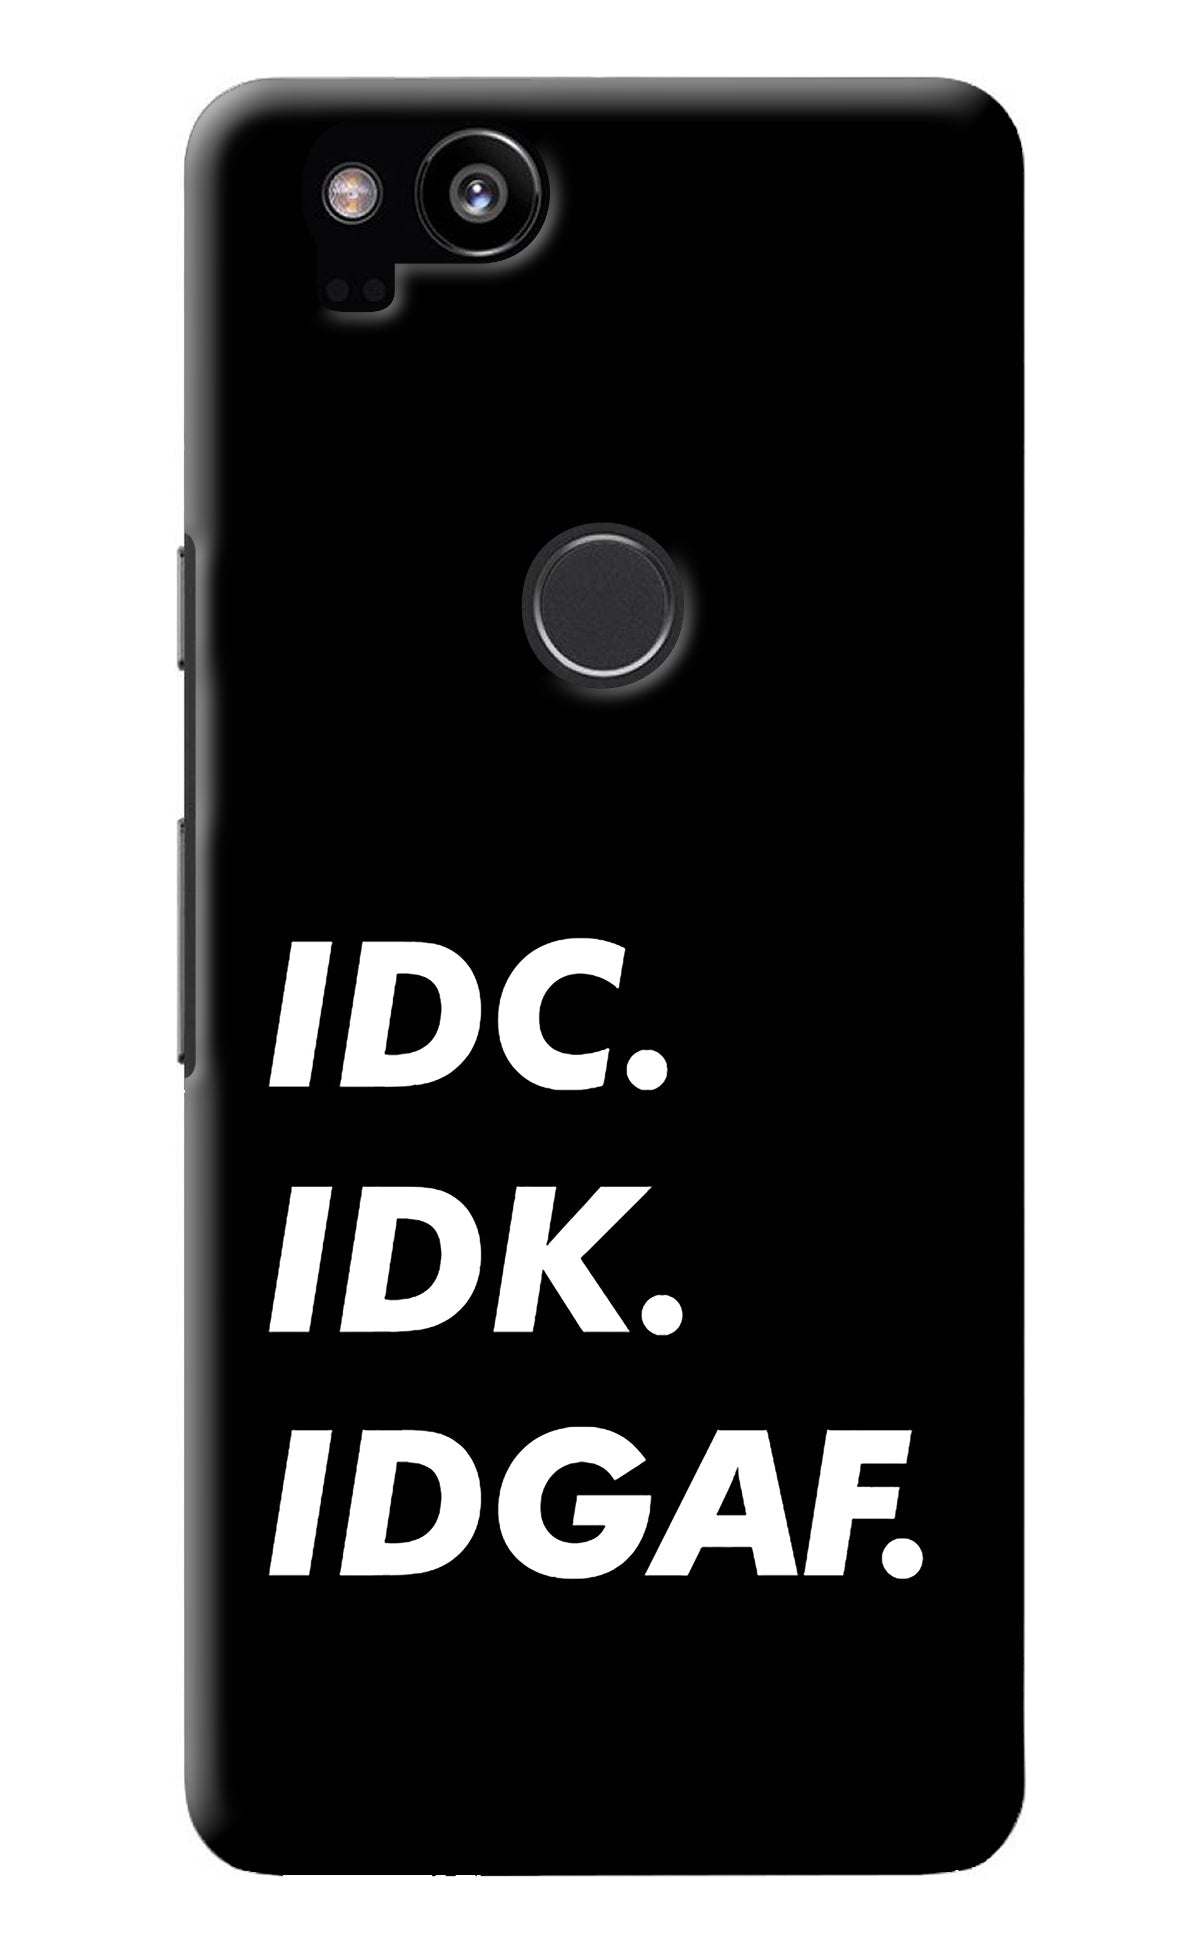 Idc Idk Idgaf Google Pixel 2 Back Cover